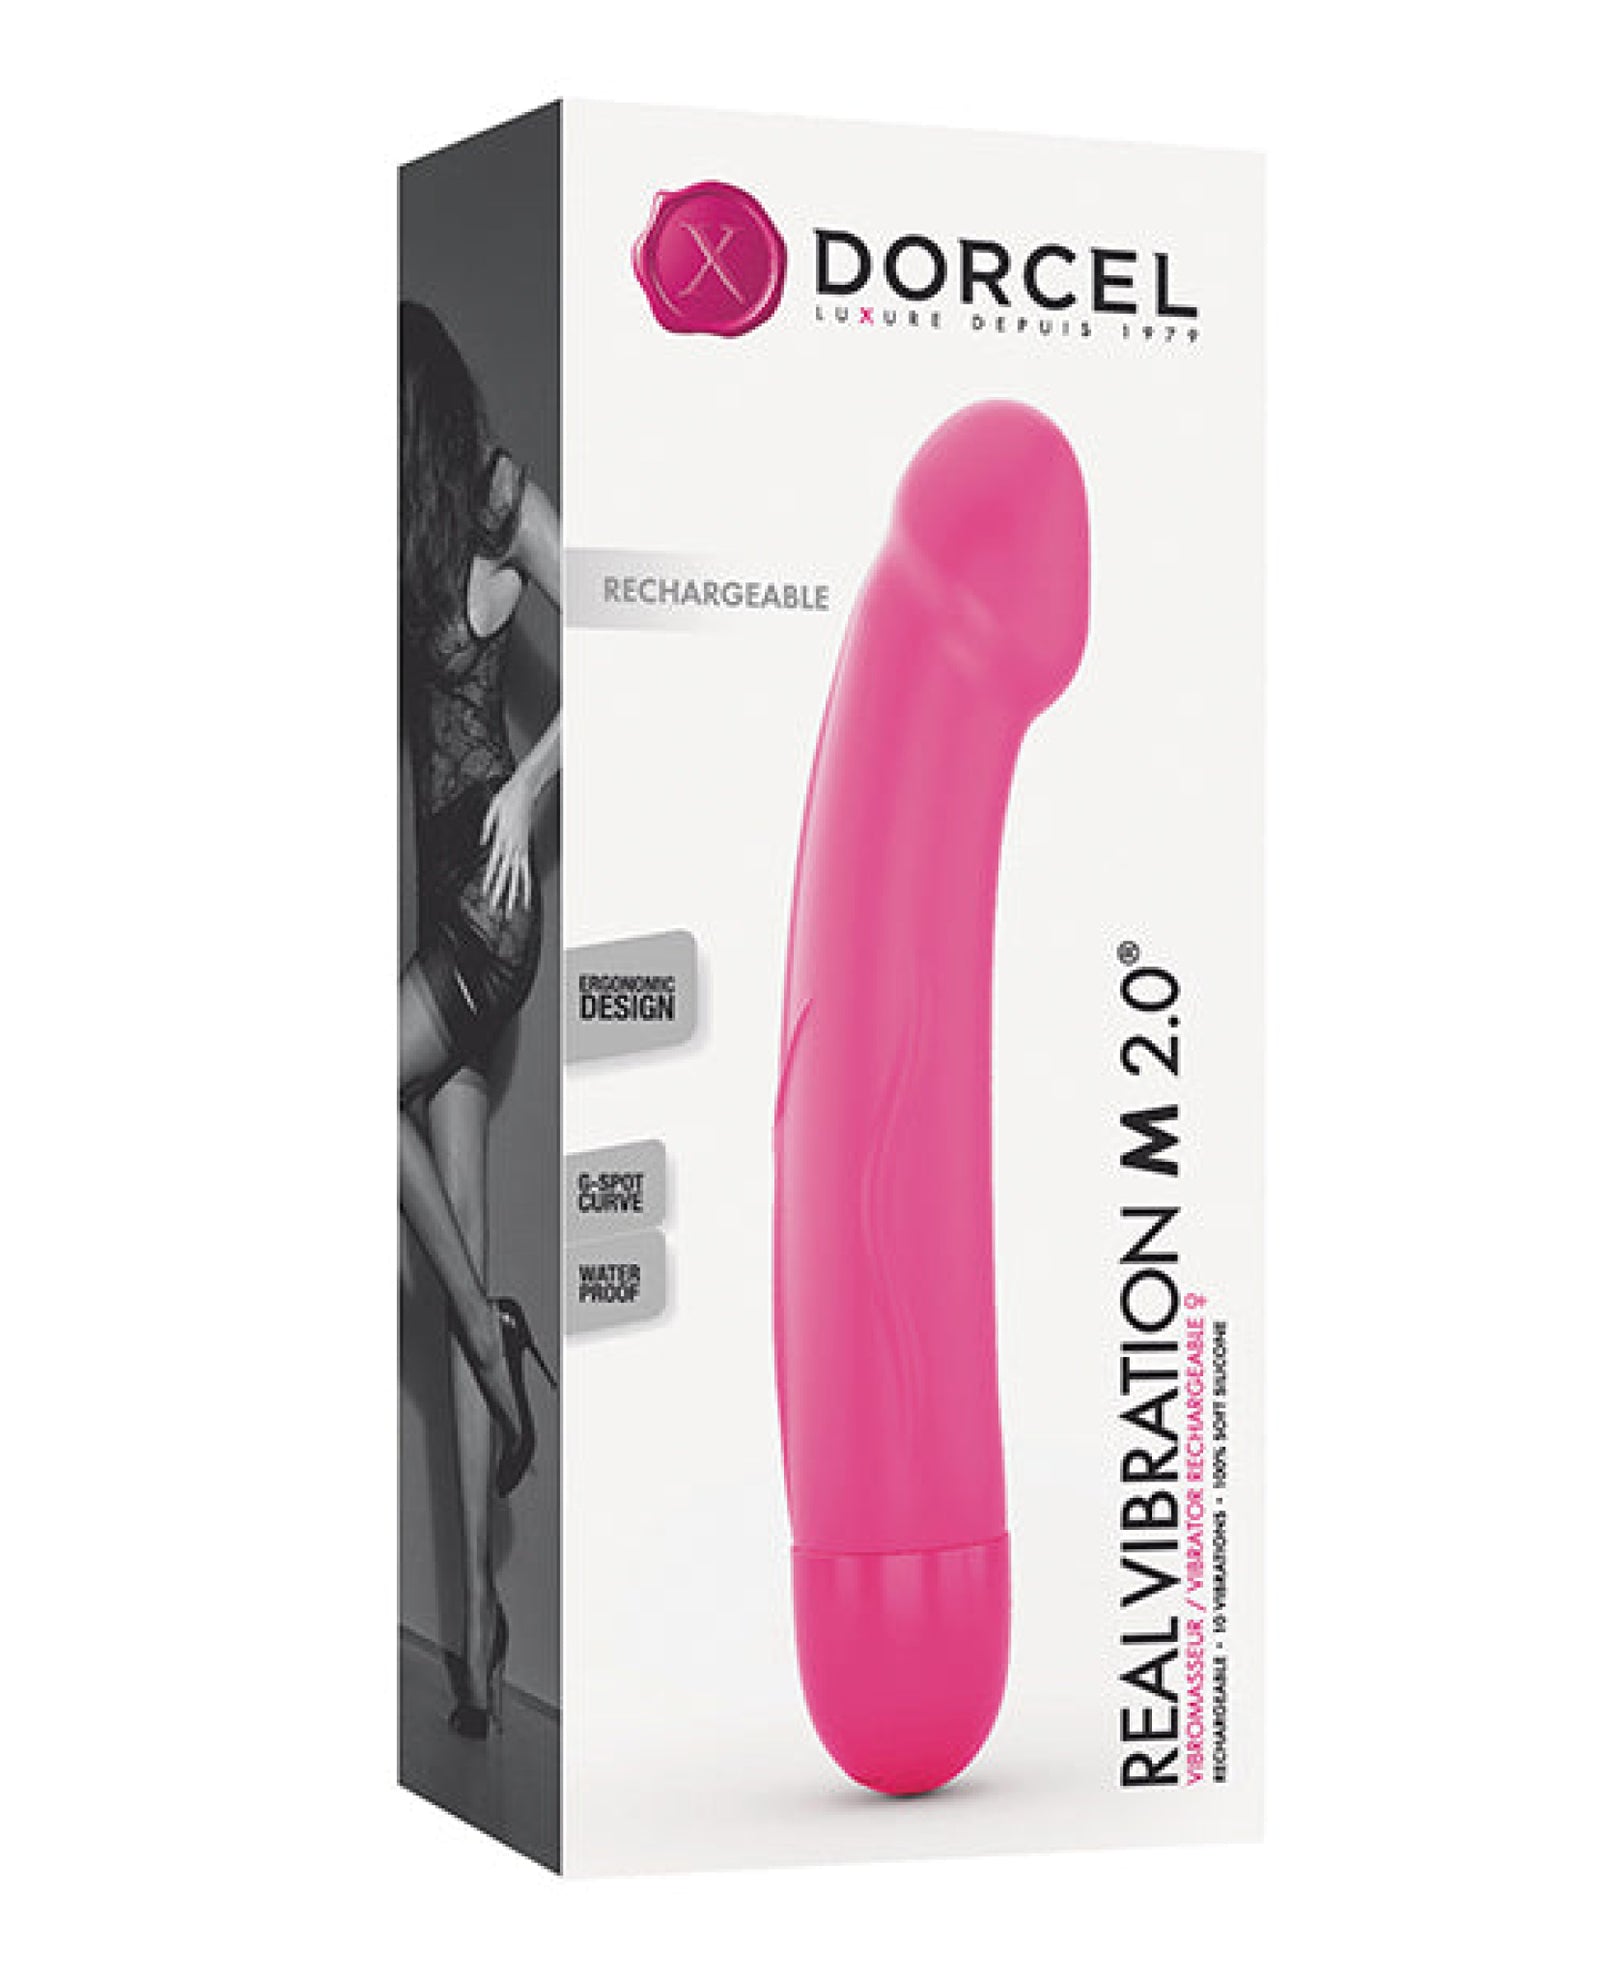 Dorcel Real Vibration M 8.6" Rechargeable - Pink Dorcel